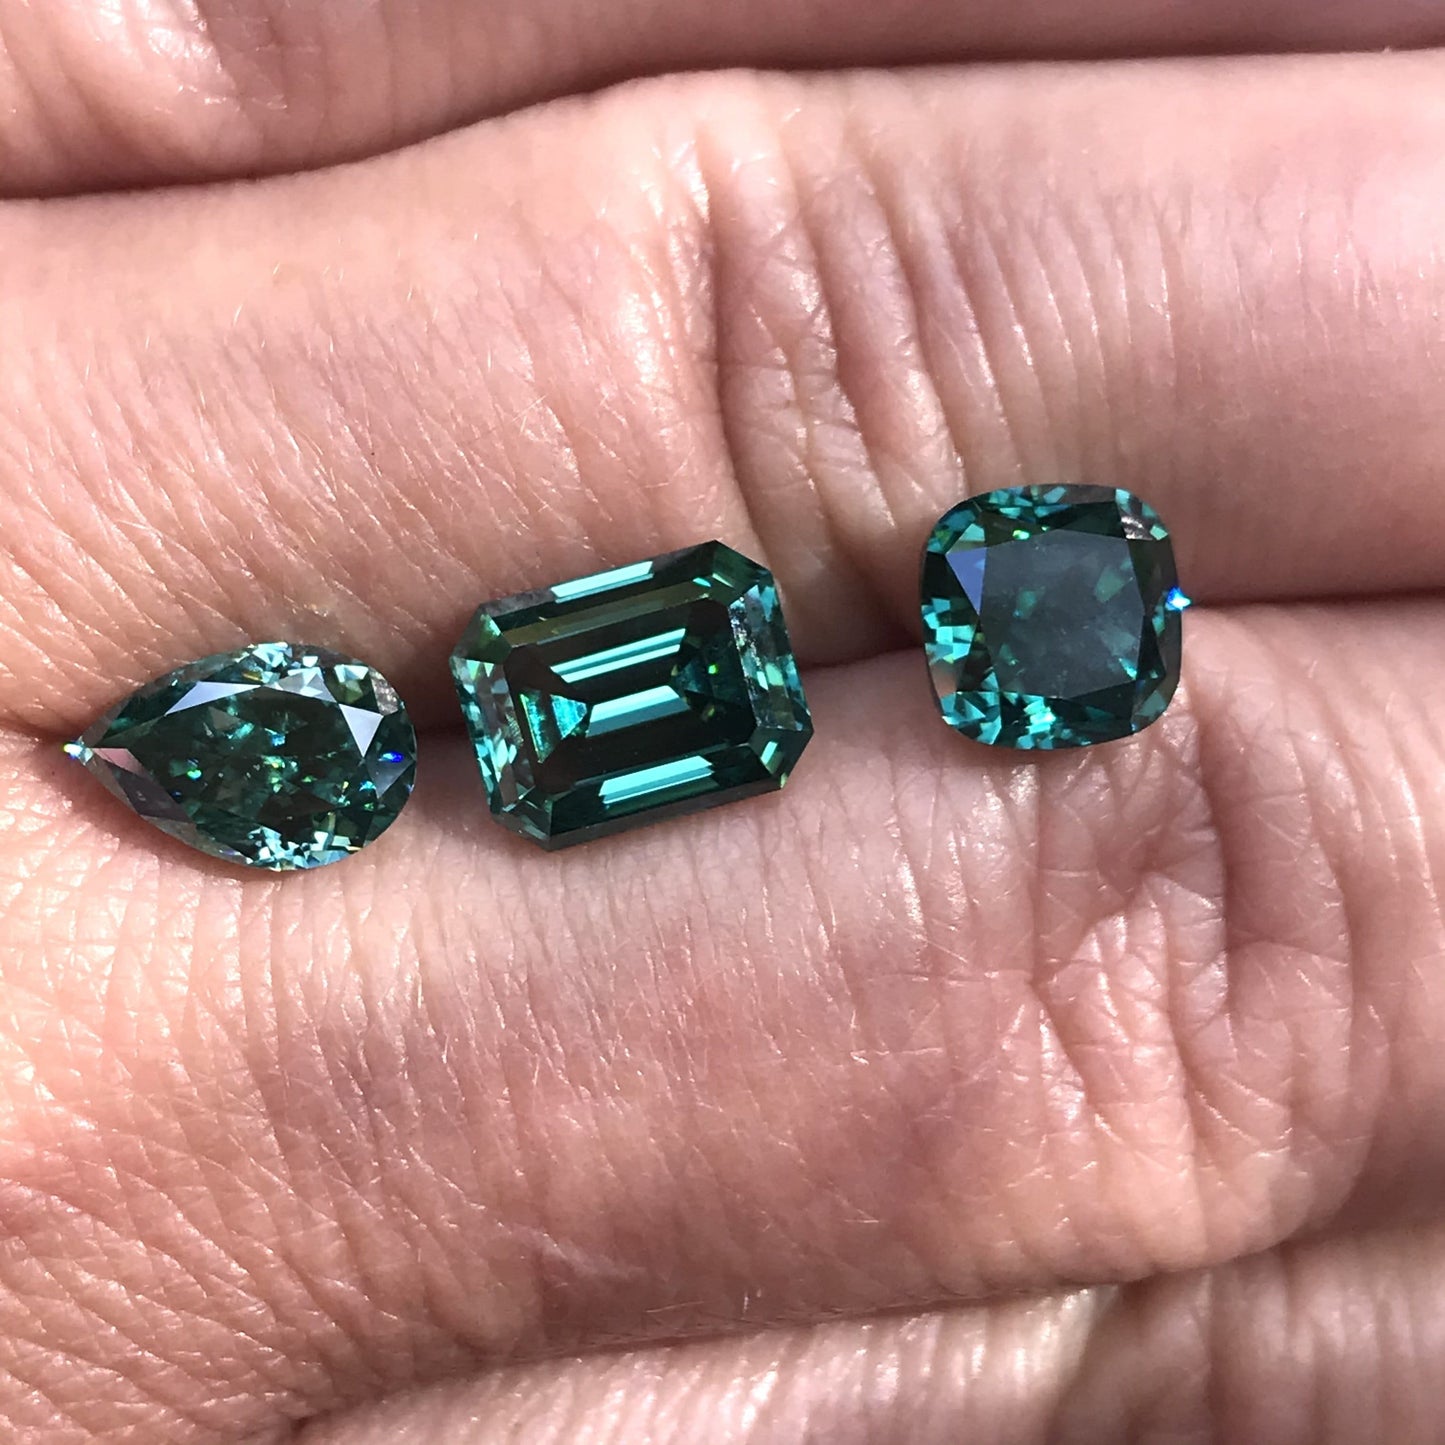 Emerald Cut Green Moissanite Loose Stone Loose Gemstone by Nodeform